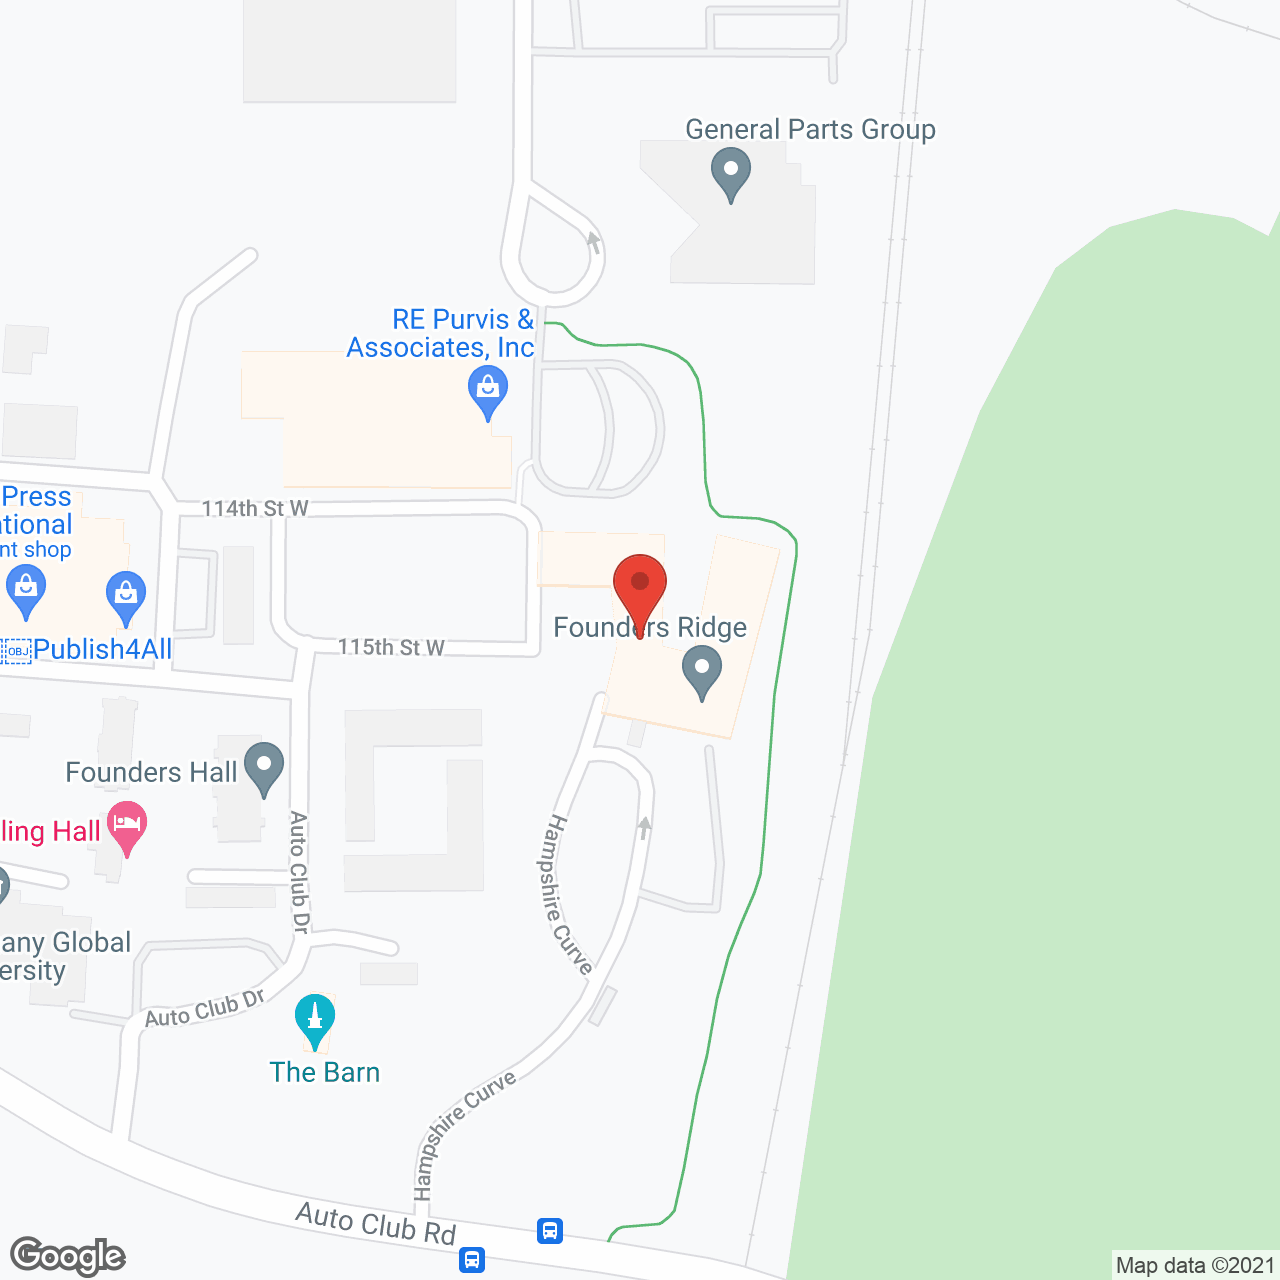 Founders Ridge in google map